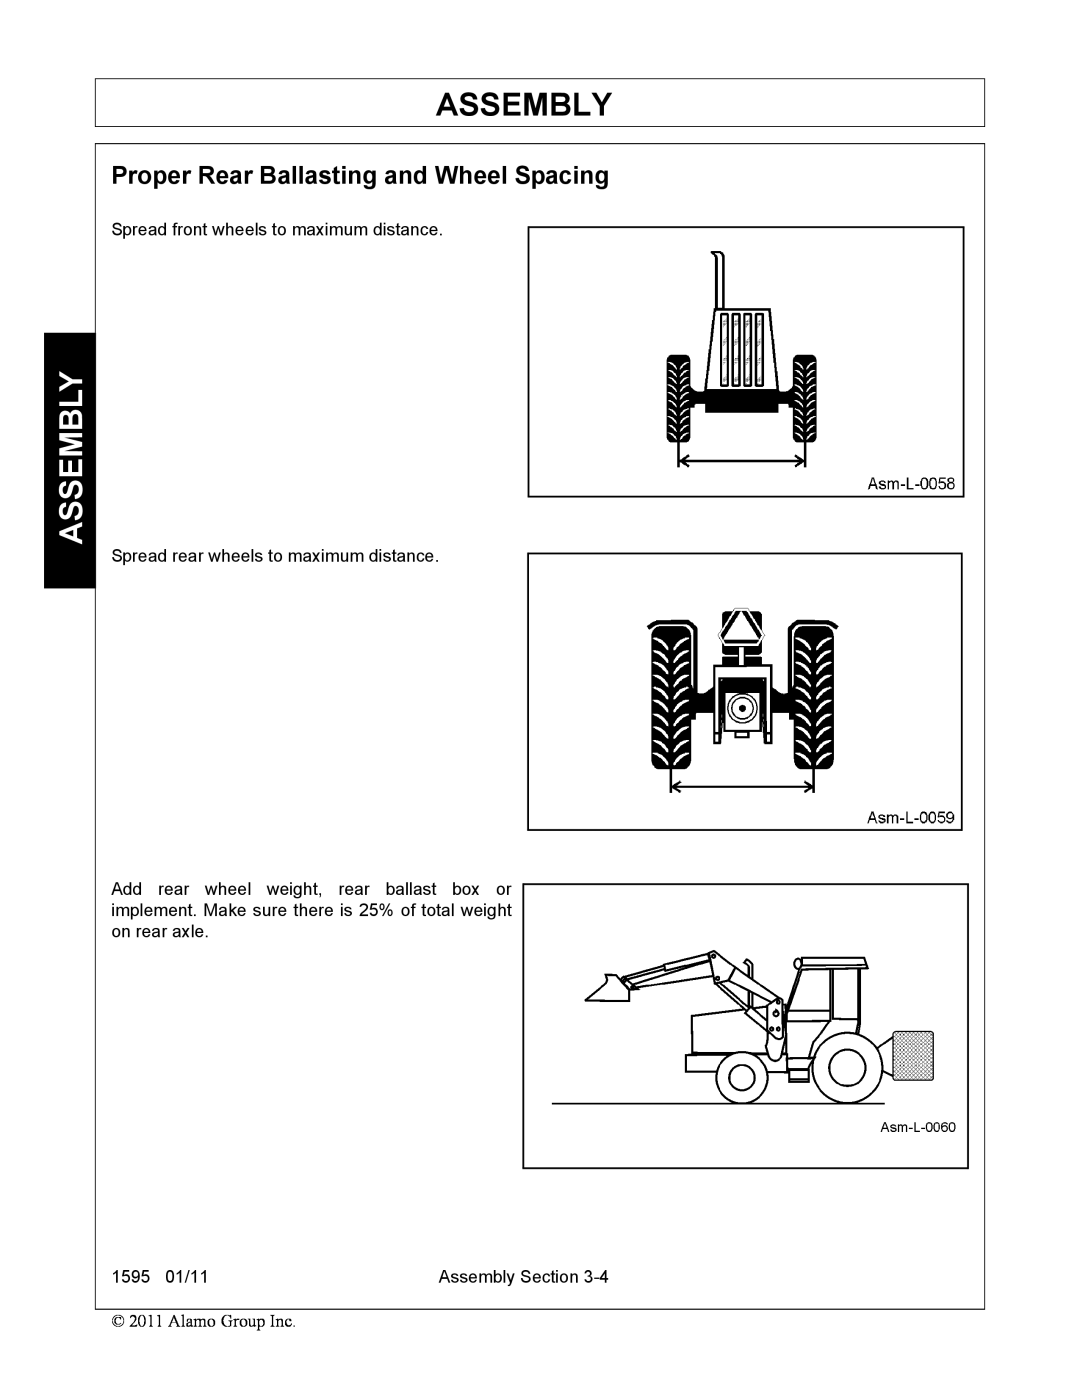 Alamo 1595 manual Assembly, Proper Rear Ballasting and Wheel Spacing 